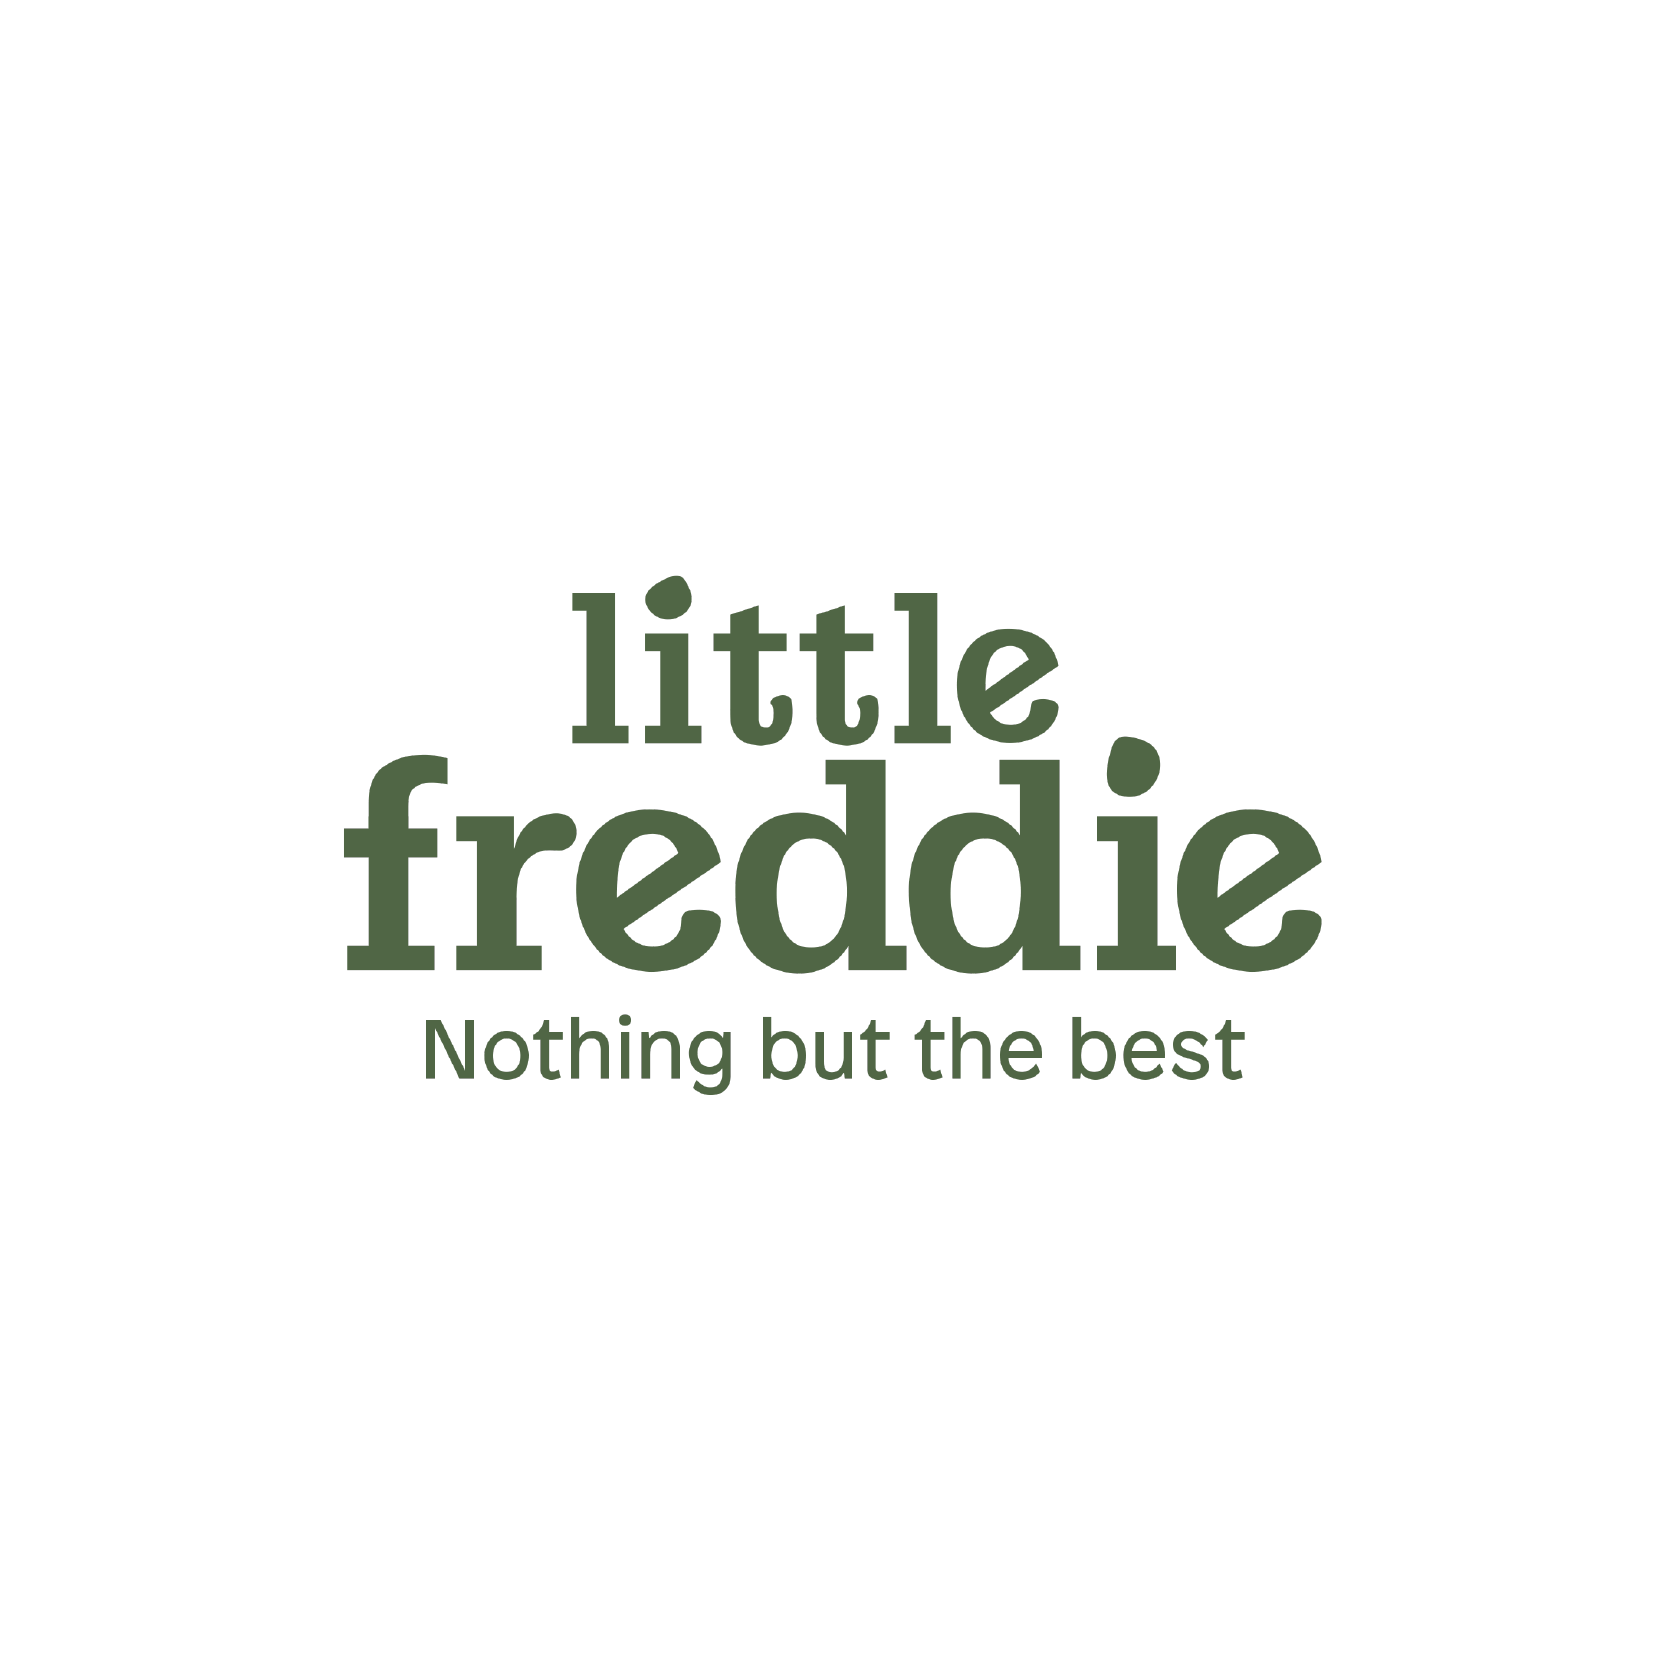 Little Freddie logo